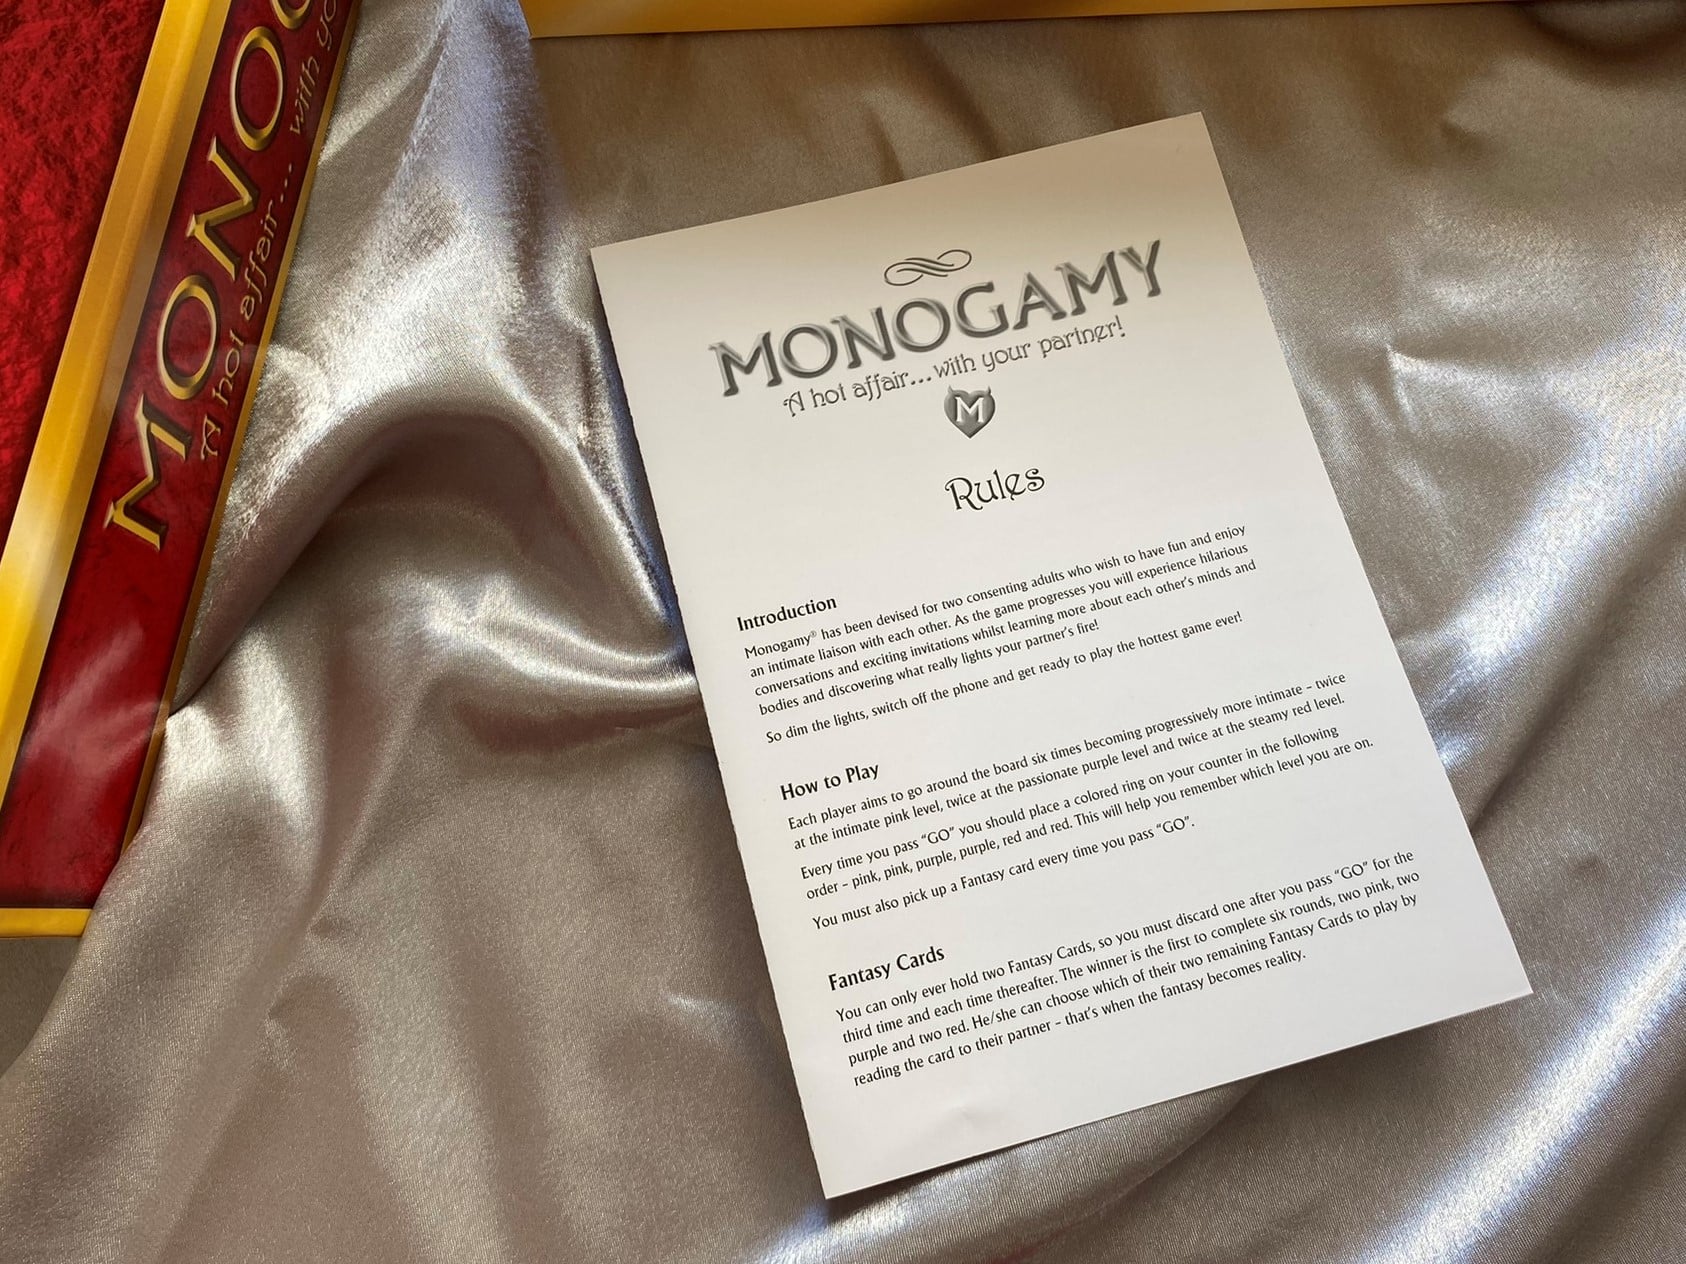 Monogamy: A Hot Affair for Couples. Slide 11